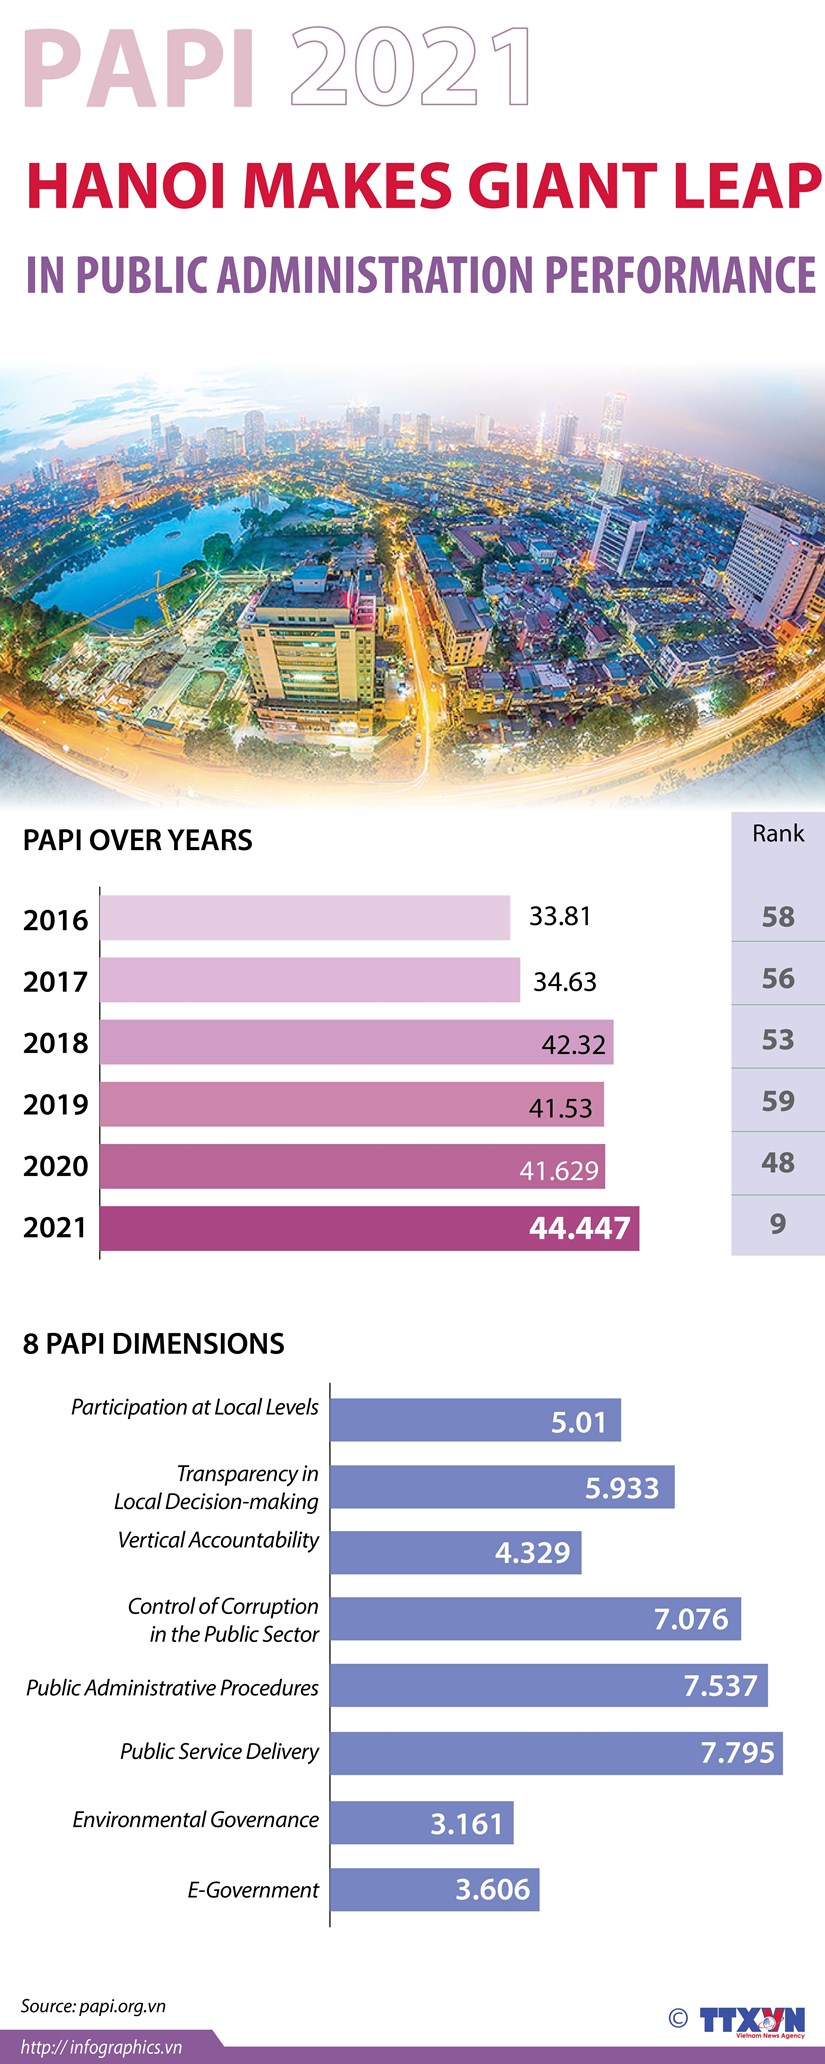 PAPI 2021: Hanoi makes giant leap hinh anh 1